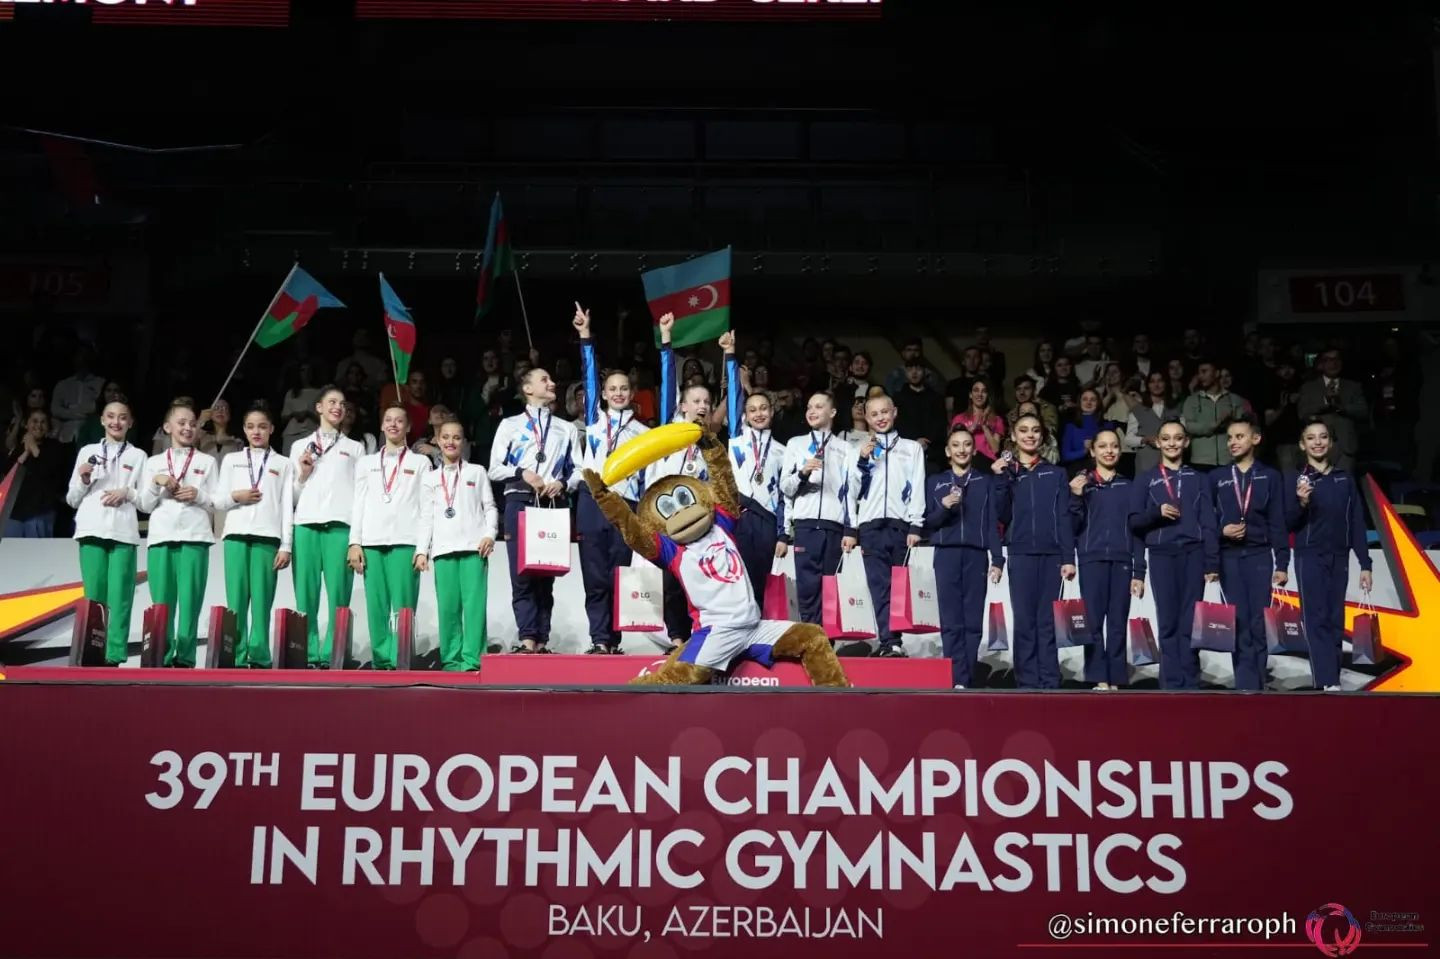 Israel win junior groups all-around gold at European Rhythmic Gymnastics Championships